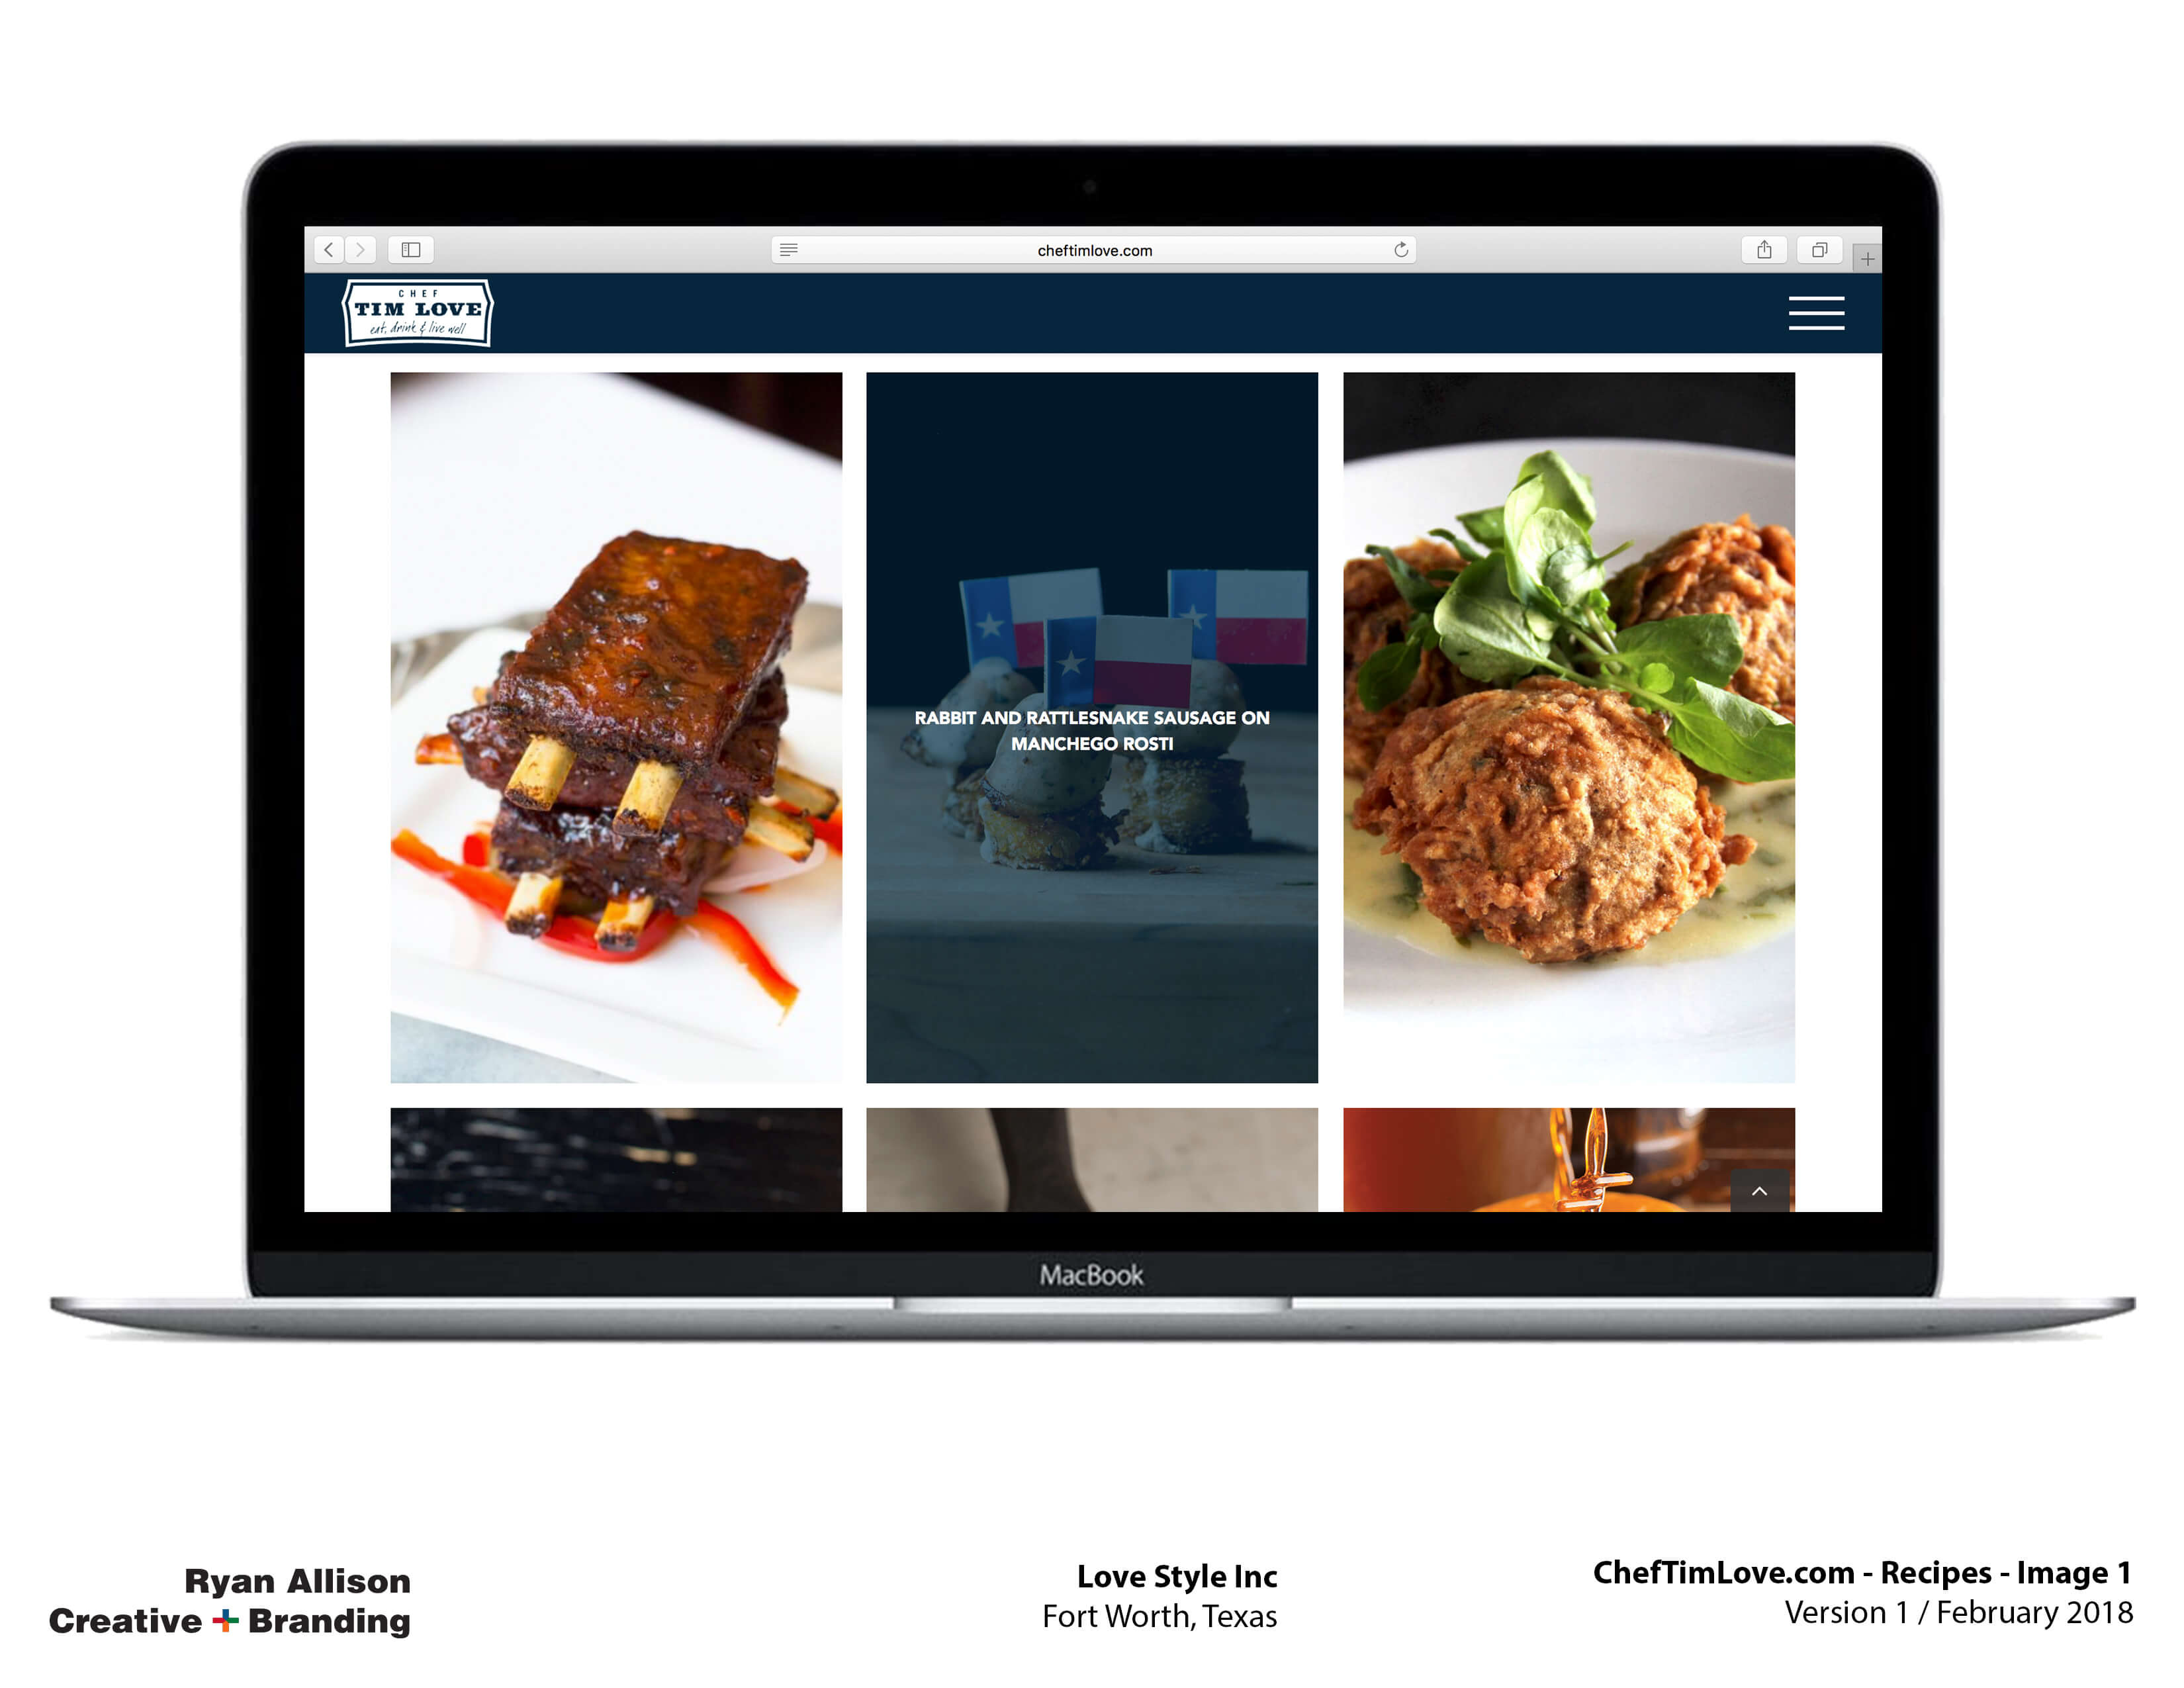 Love Style Inc Chef Tim Love Website Recipes 1 - Project - Ryan Allison Creative + Branding